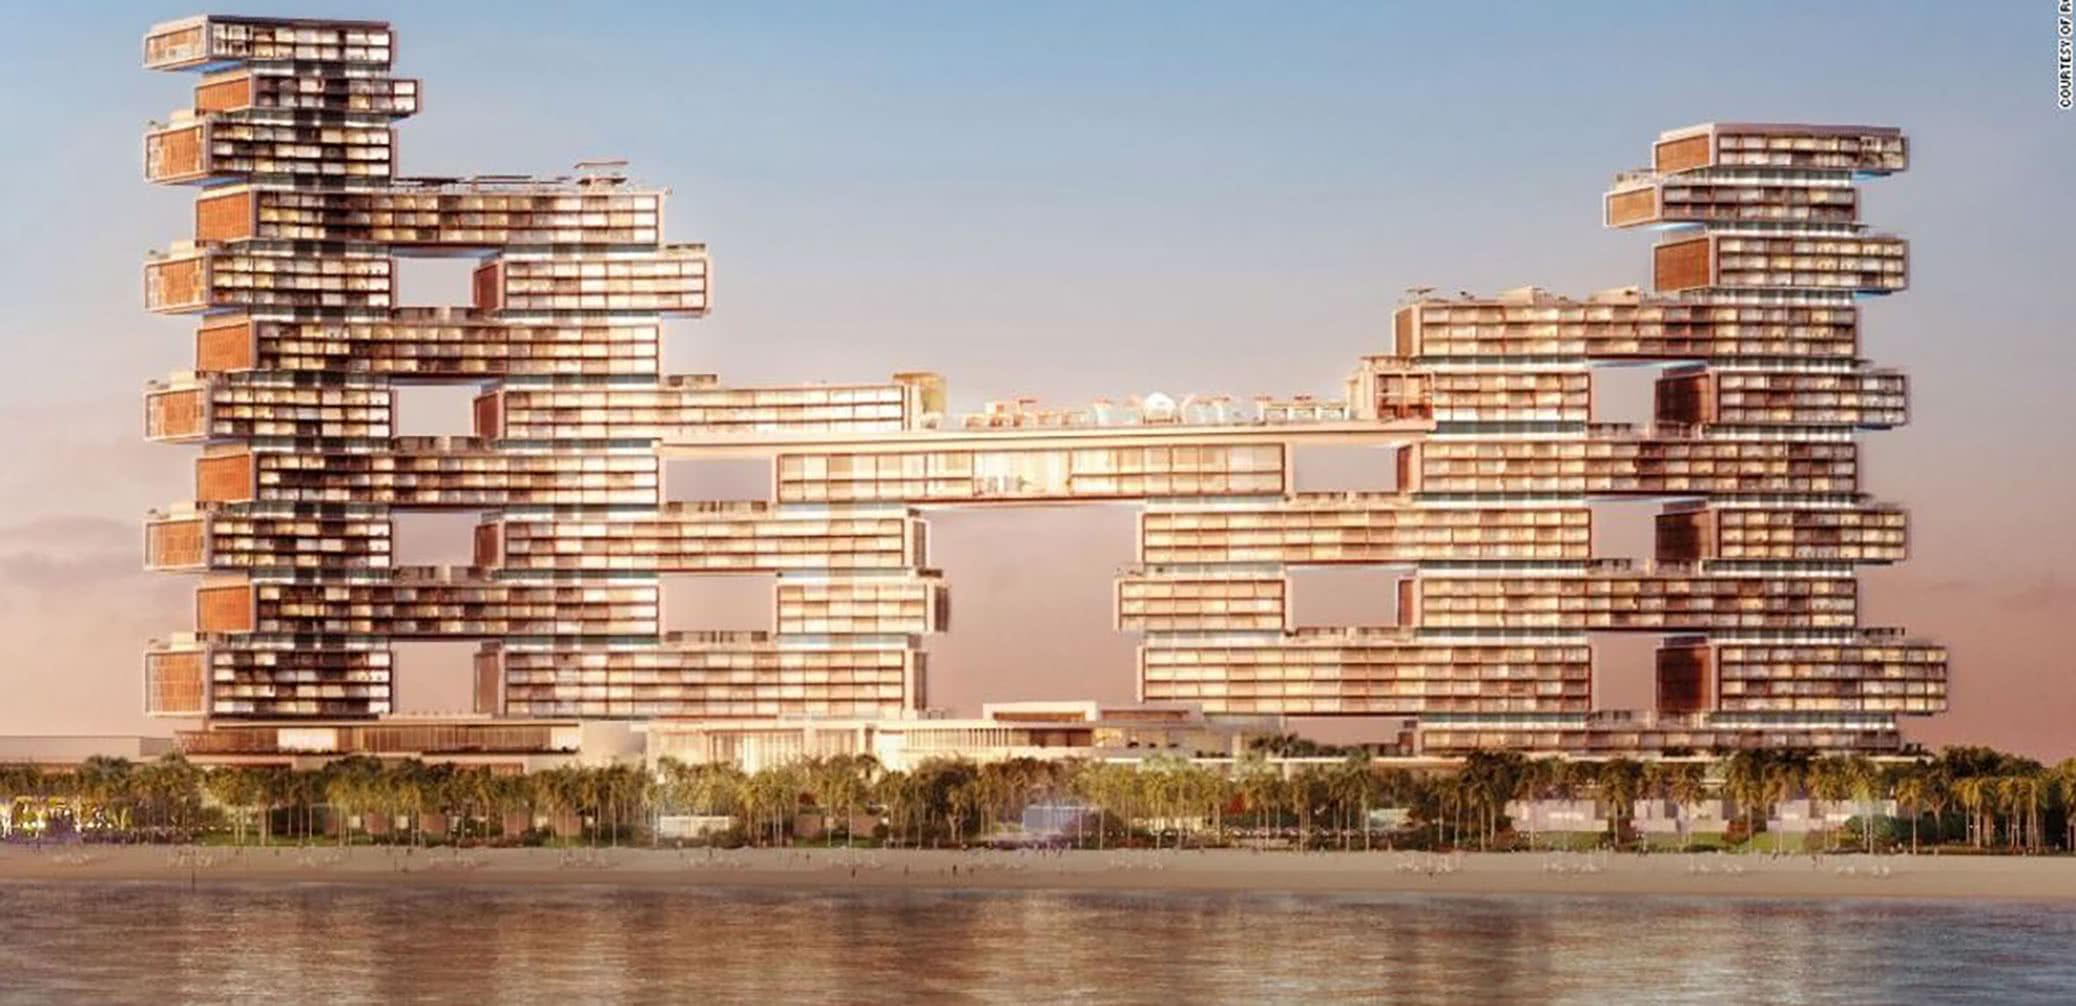 Dubai’s New $1.4bn Hotel May Surpass Celebrity Magnet, Atlantis The Palm